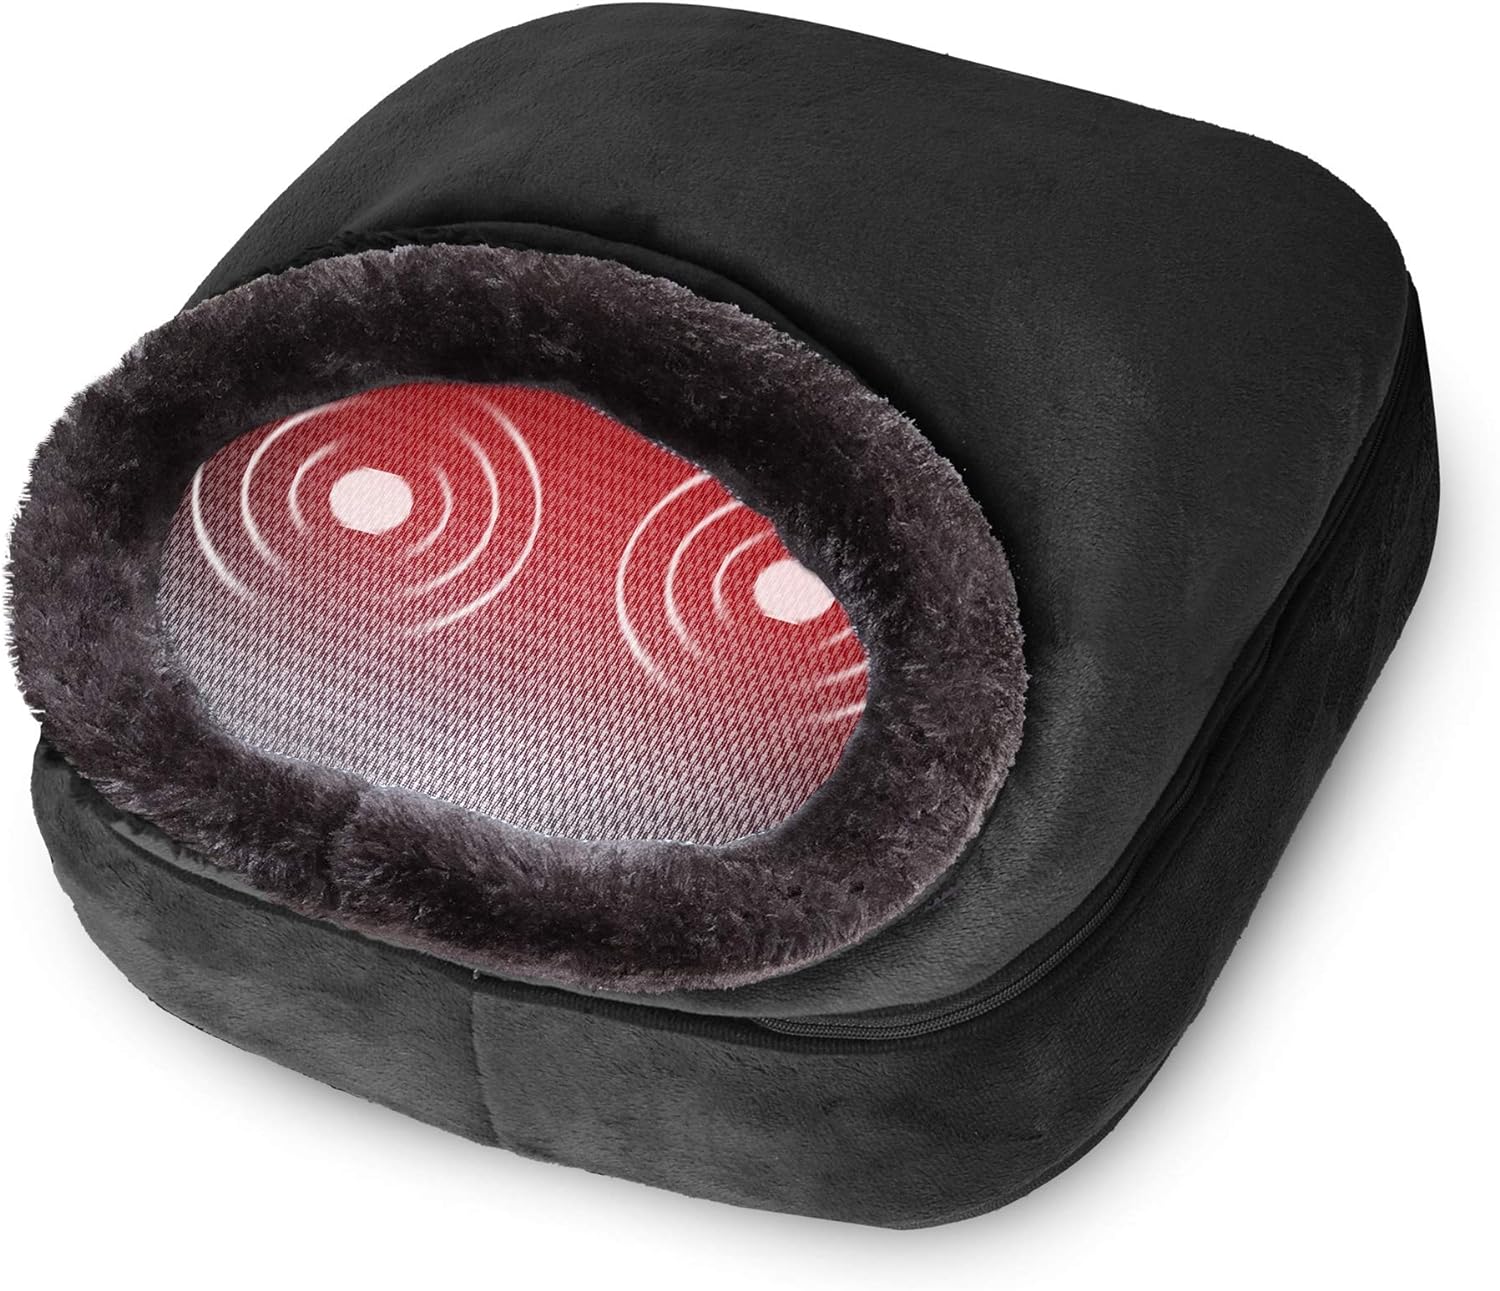 Electric Foot Feet heat Warmer with Massage Vibration & back Heating Cushion pad Nieuw binnen, erg populair